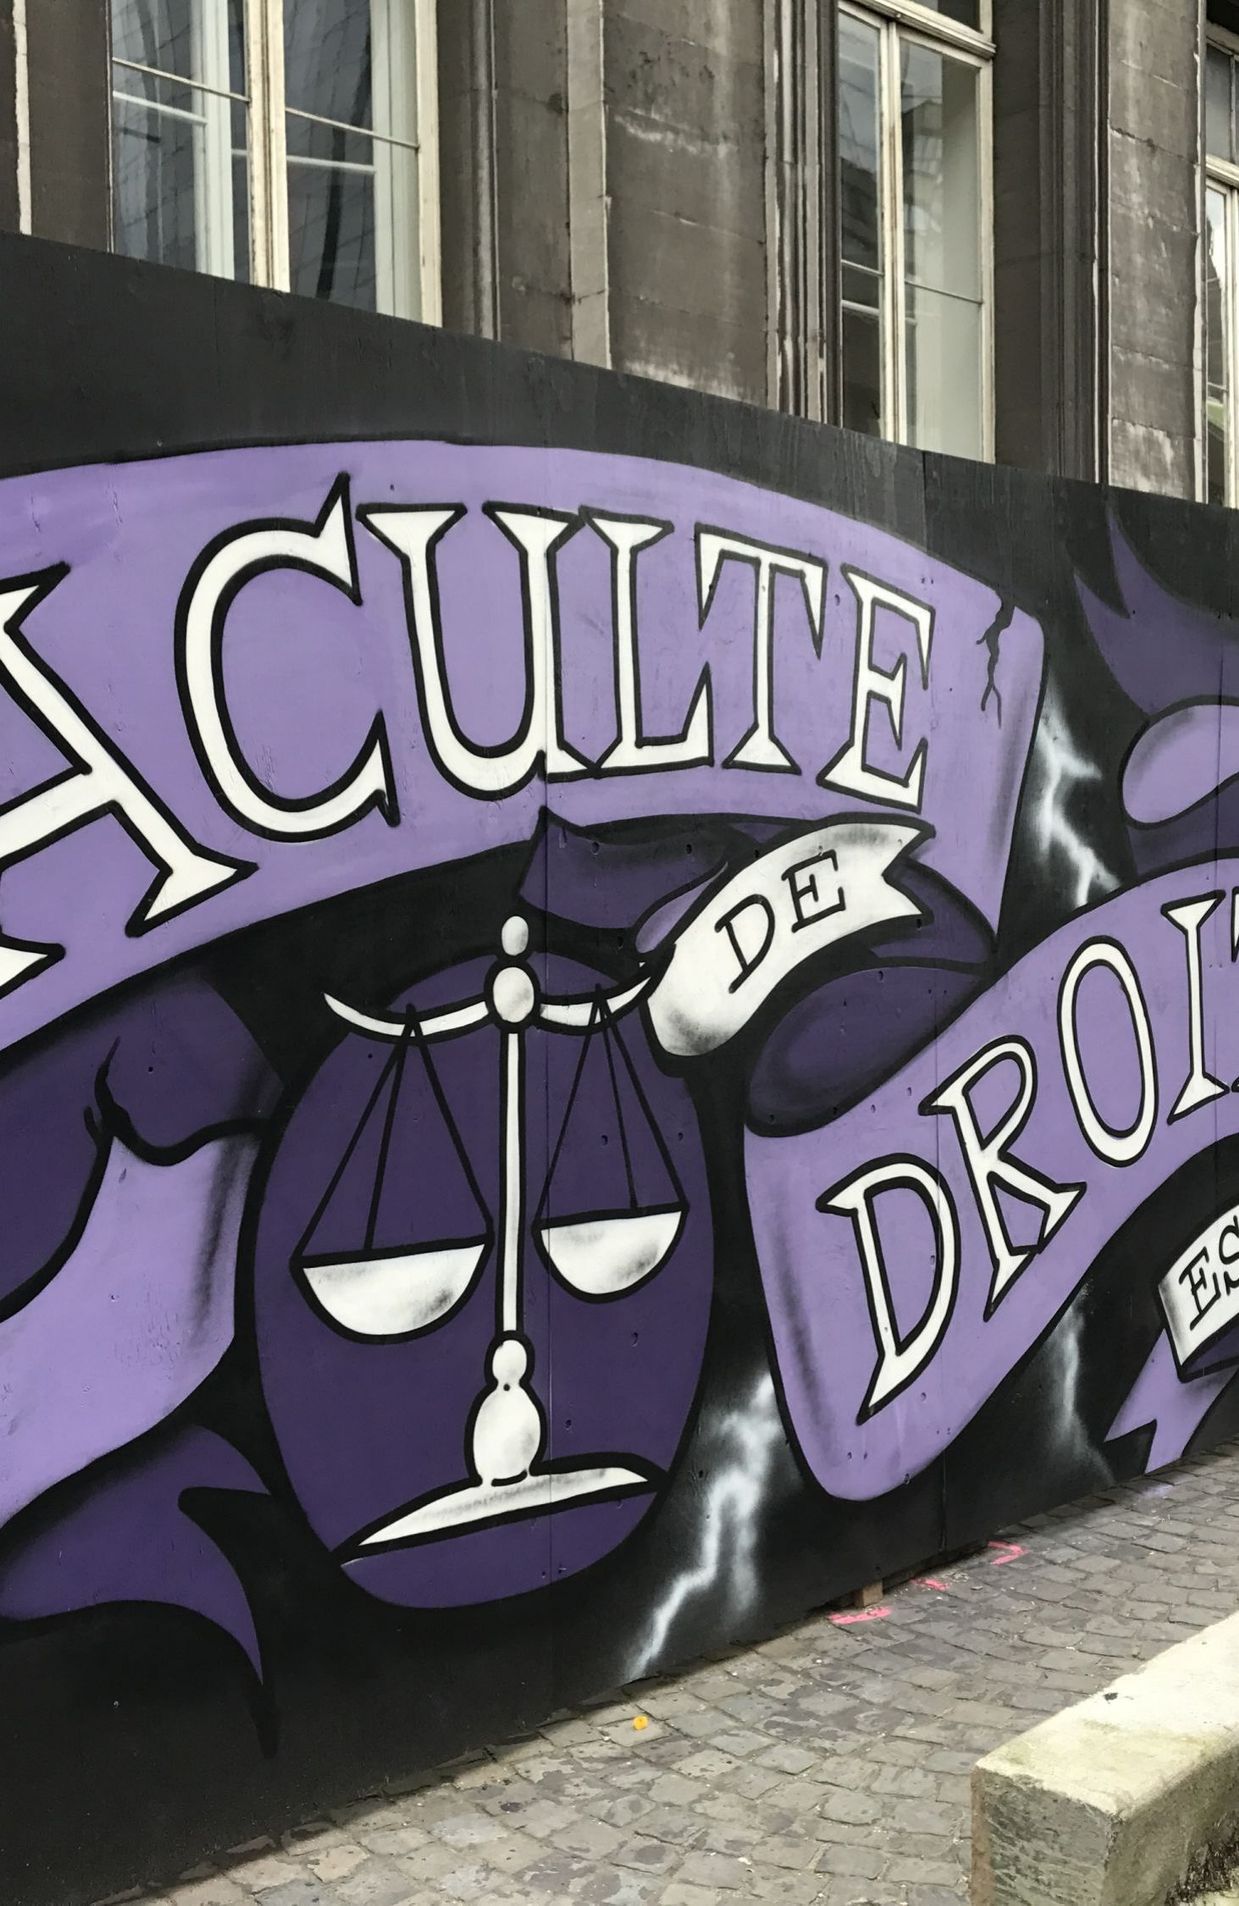 Spray Can Arts : un collectif de street art à Liège